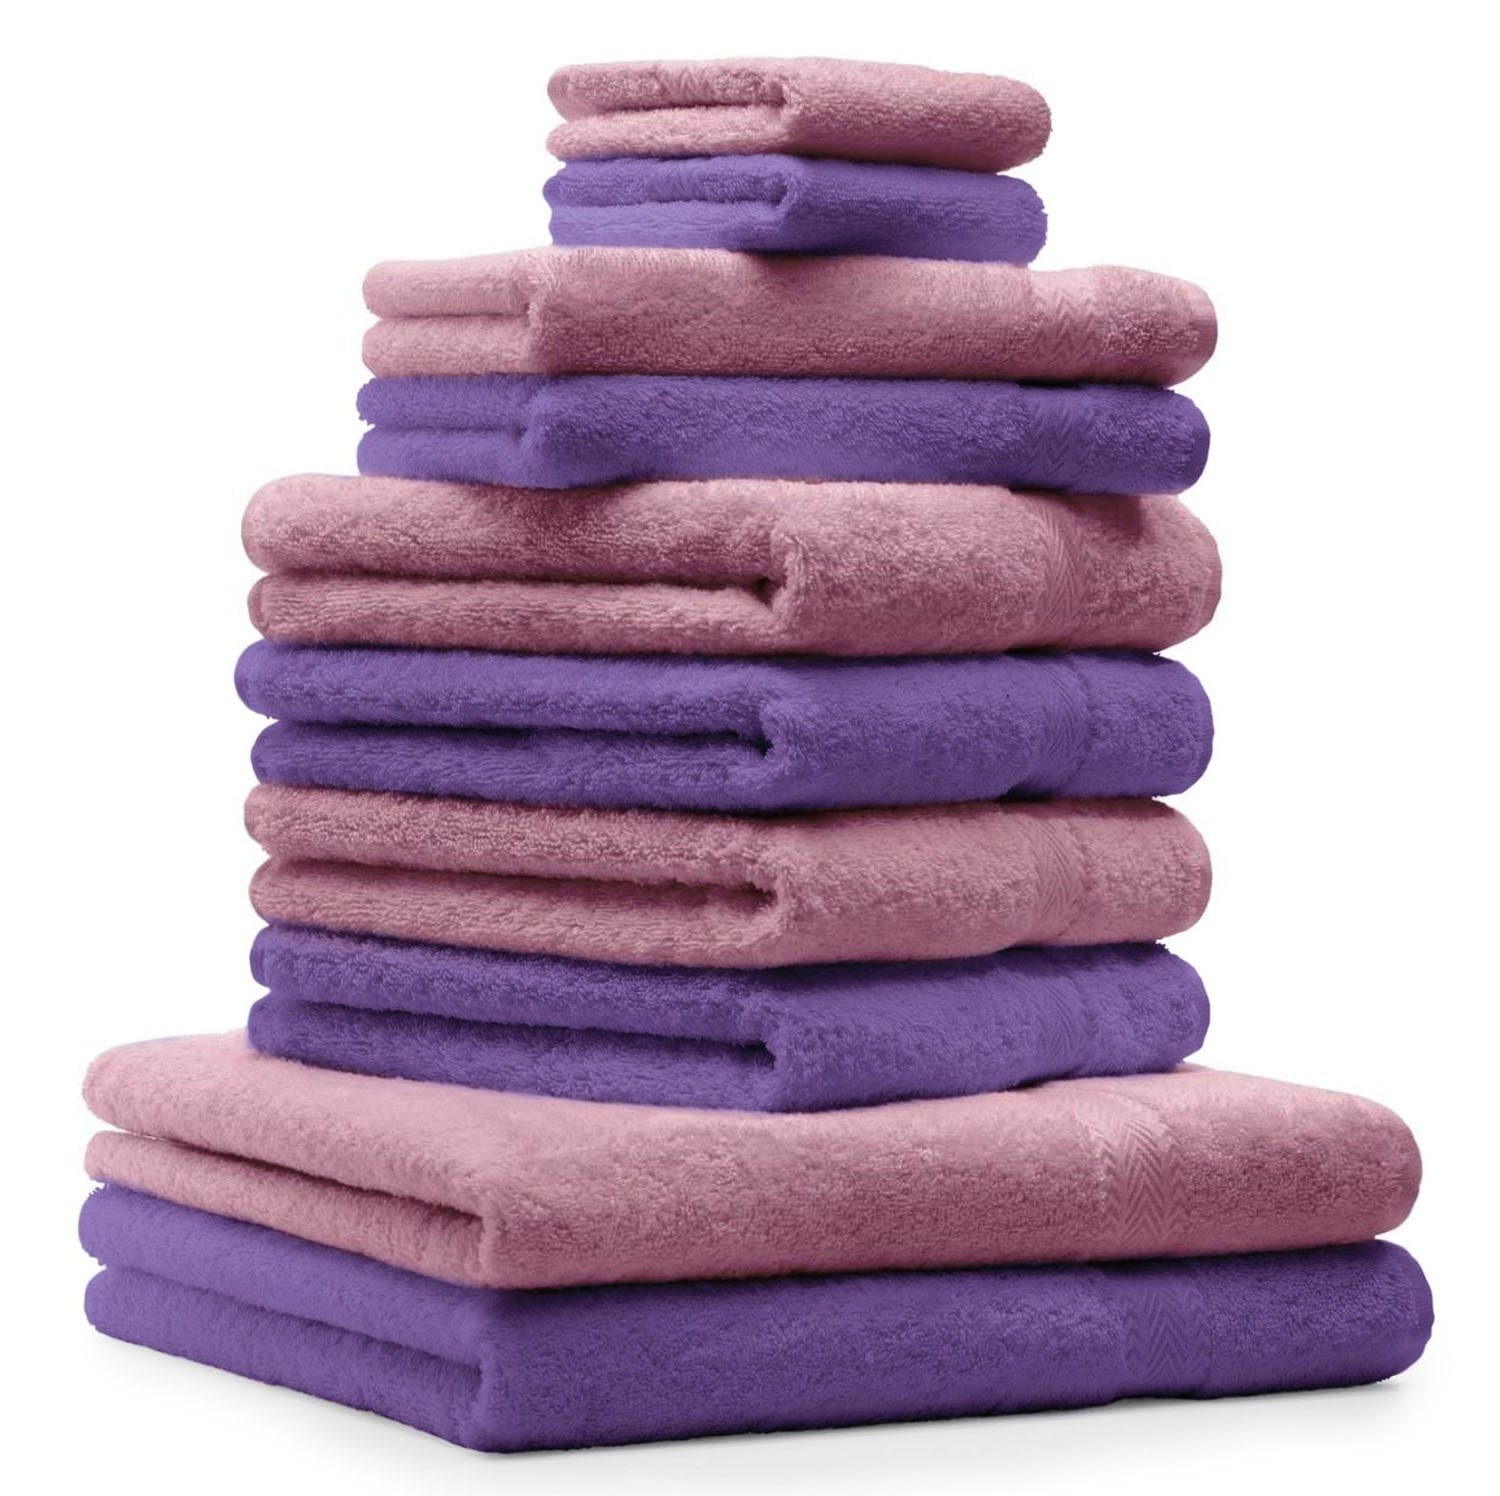 Betz Handtuch Set 10-TLG. Handtuch-Set Premium Farbe Altrosa & Lila, Baumwolle, (10-tlg)